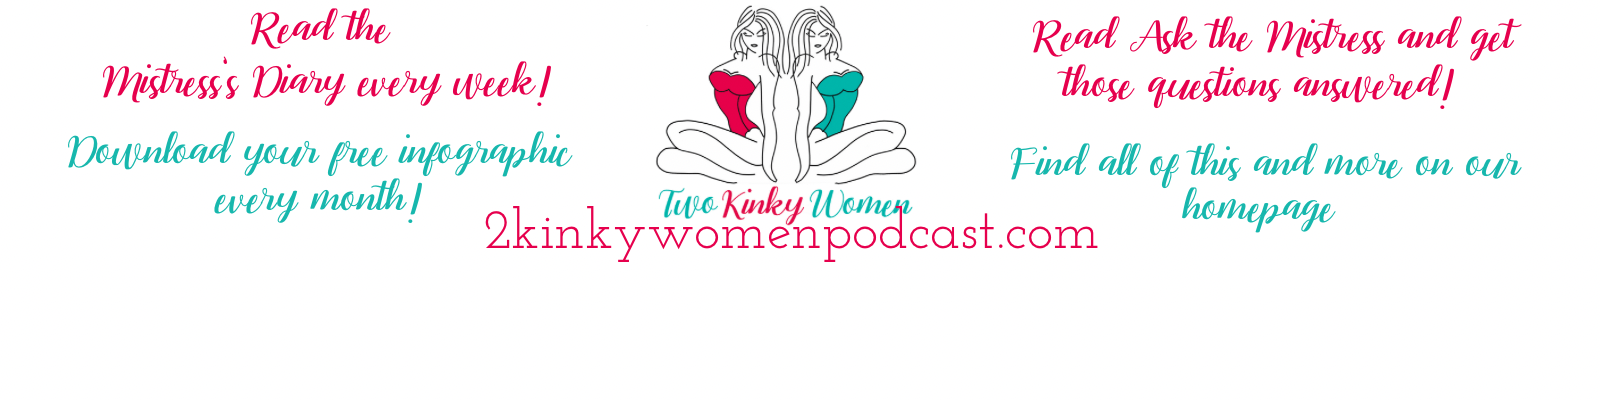 The 2 Kinky Women Podcast